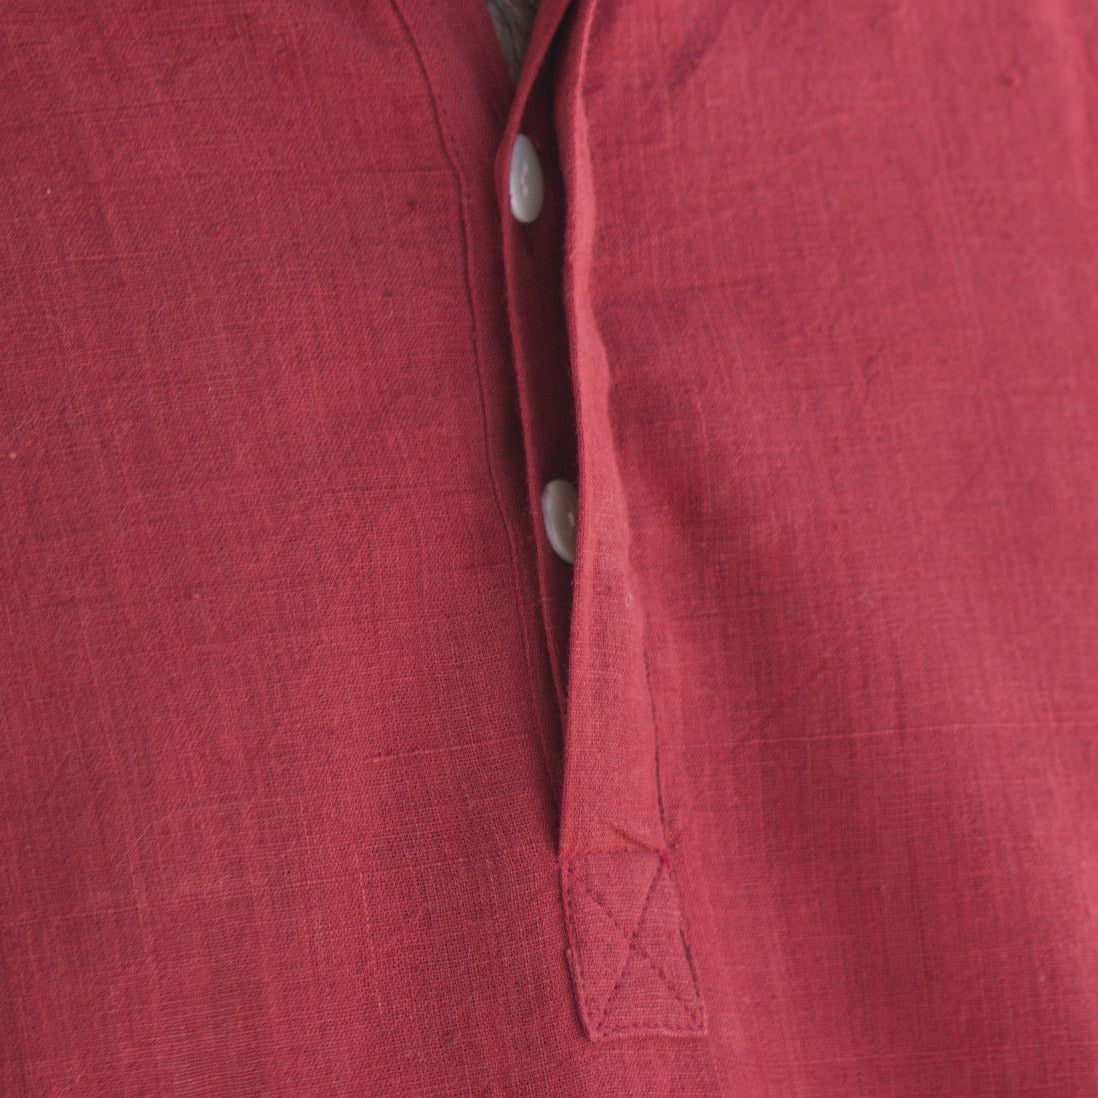 Malkha XA3916 Handspun Cotton Unisex Shirt Wearable Stitched Garment Textile Weaving